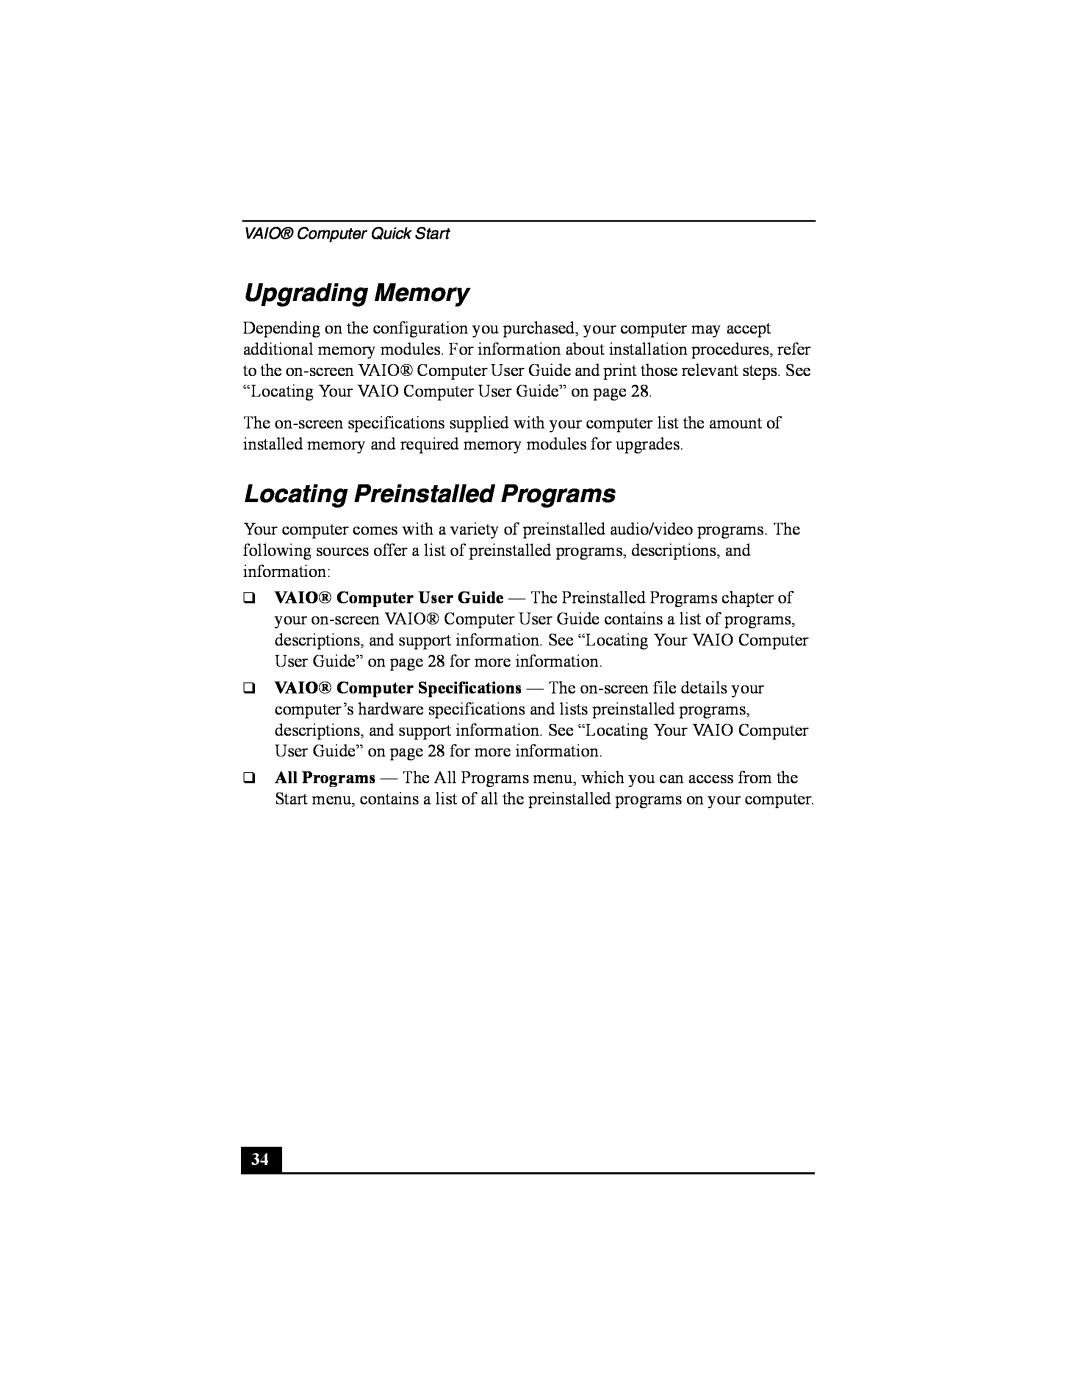 Sony PCG-FRV manual Upgrading Memory, Locating Preinstalled Programs 